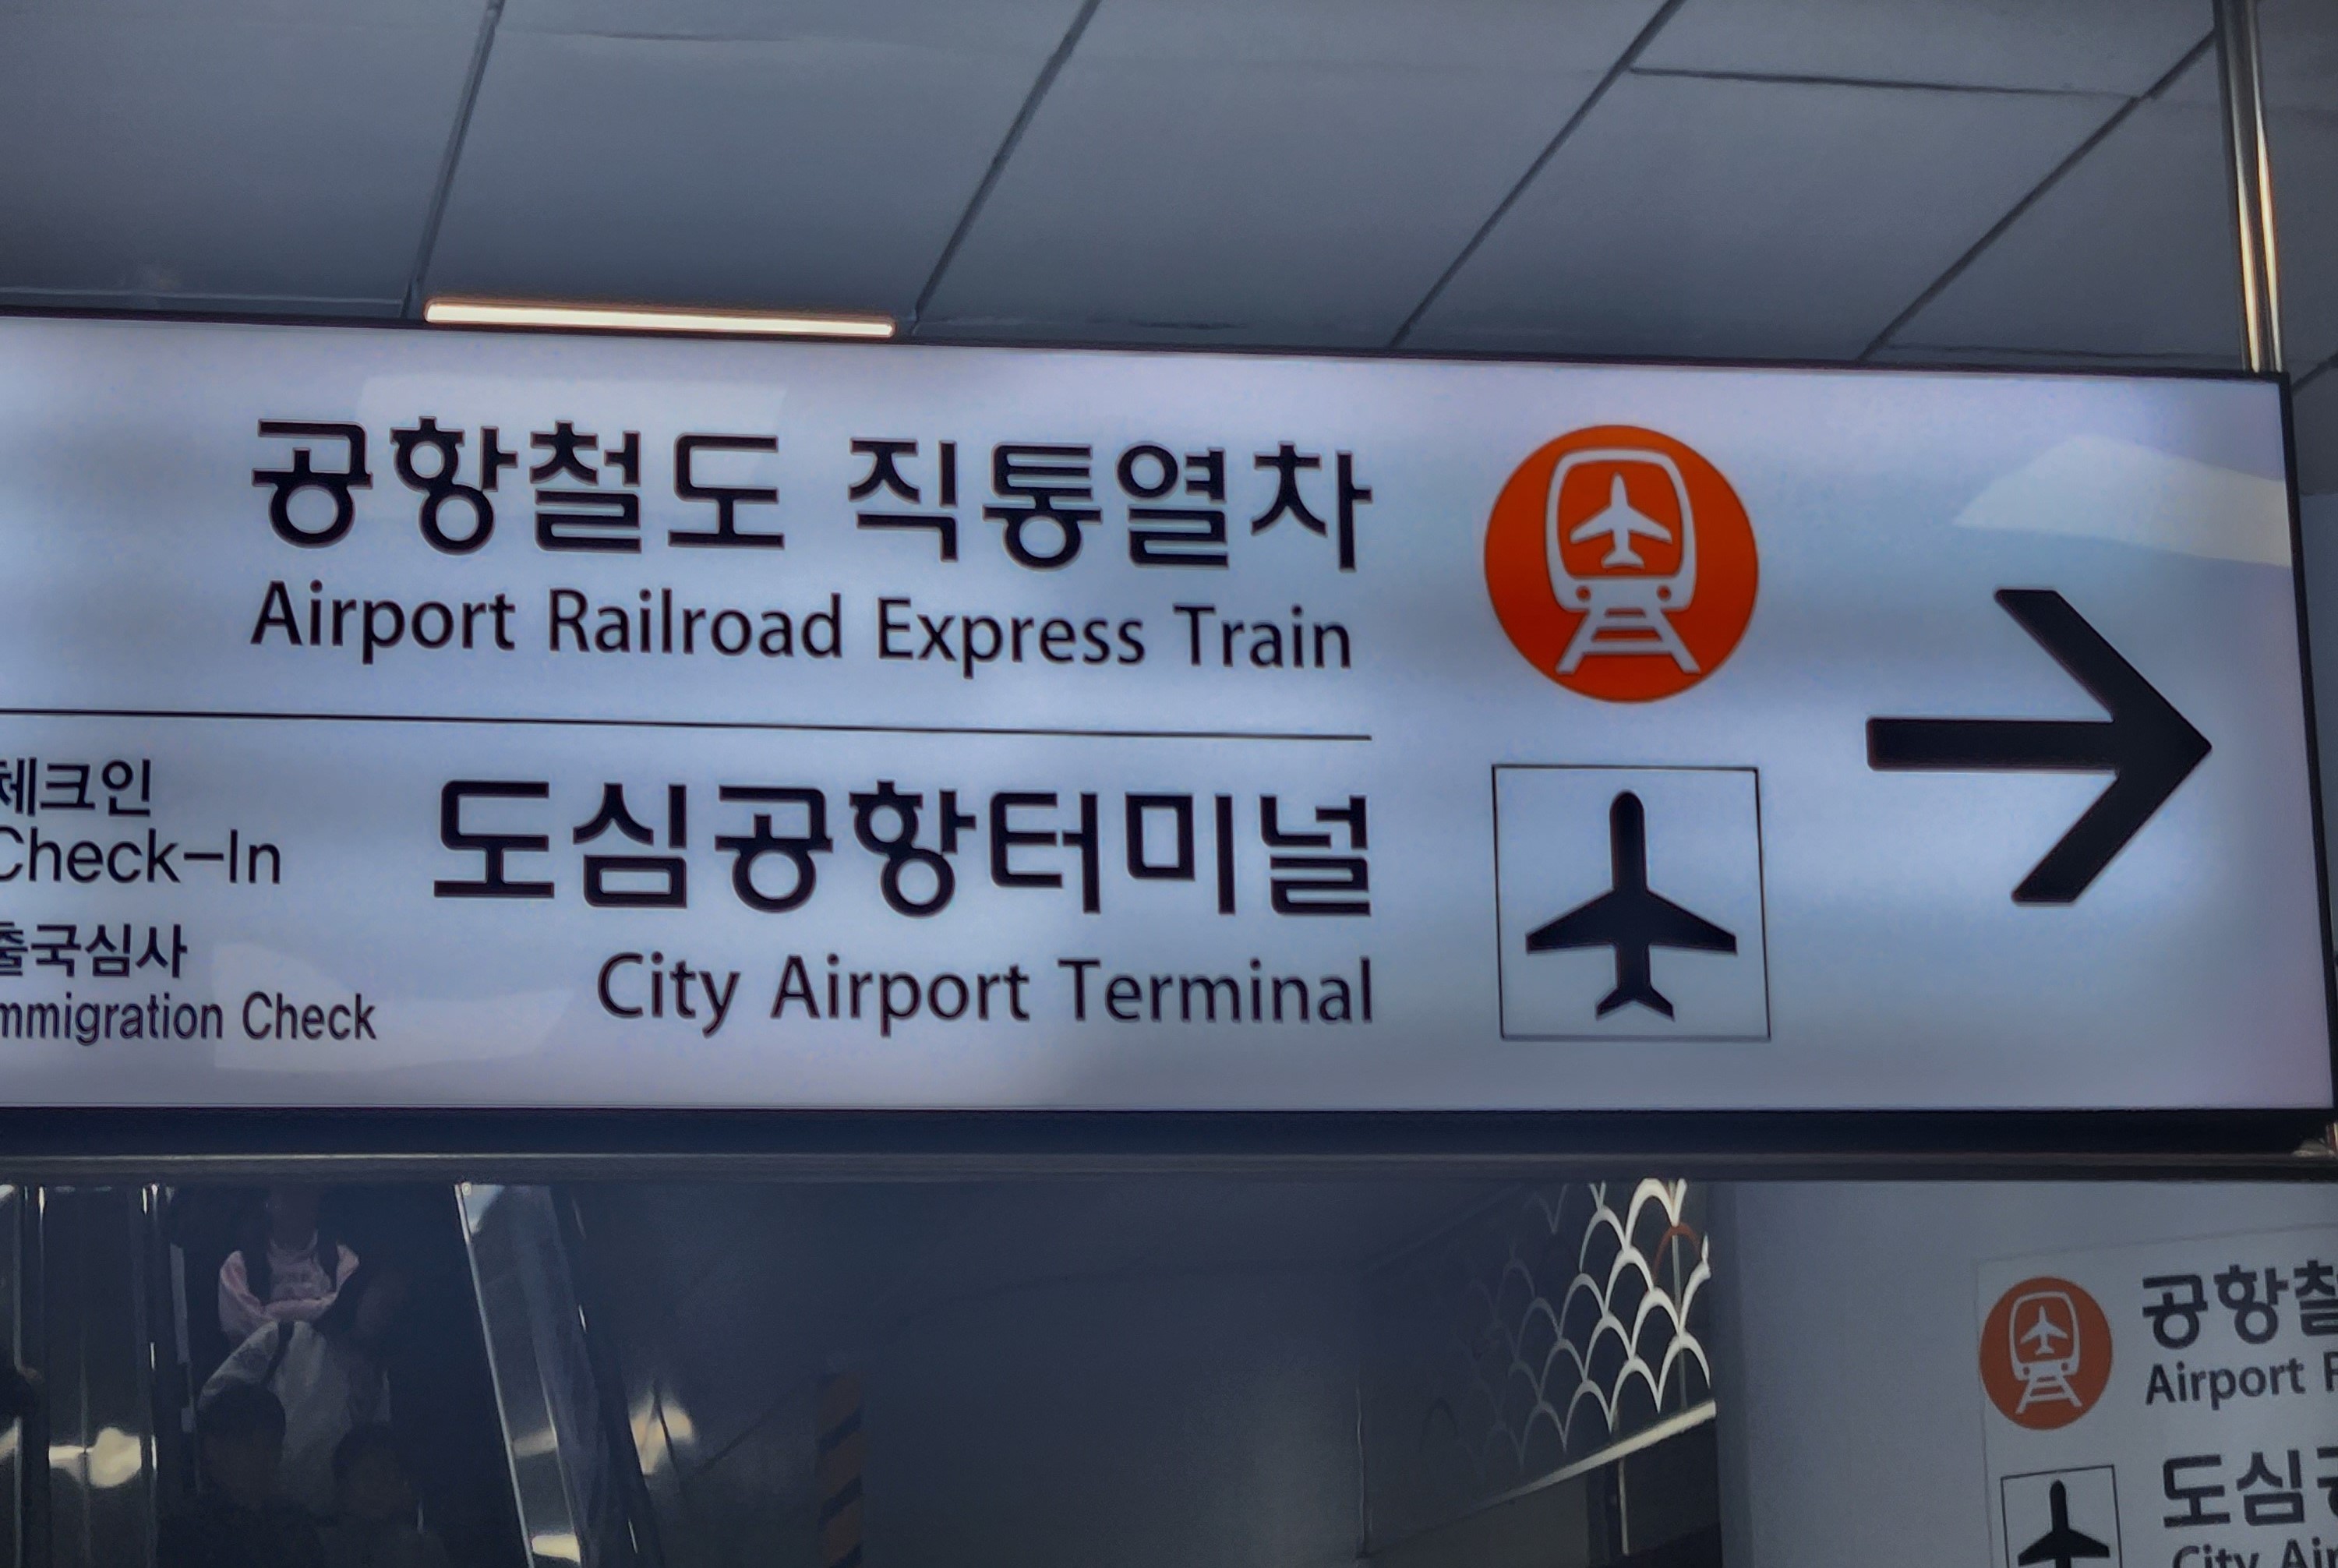 Express Train of Airport Railroad in Seoul